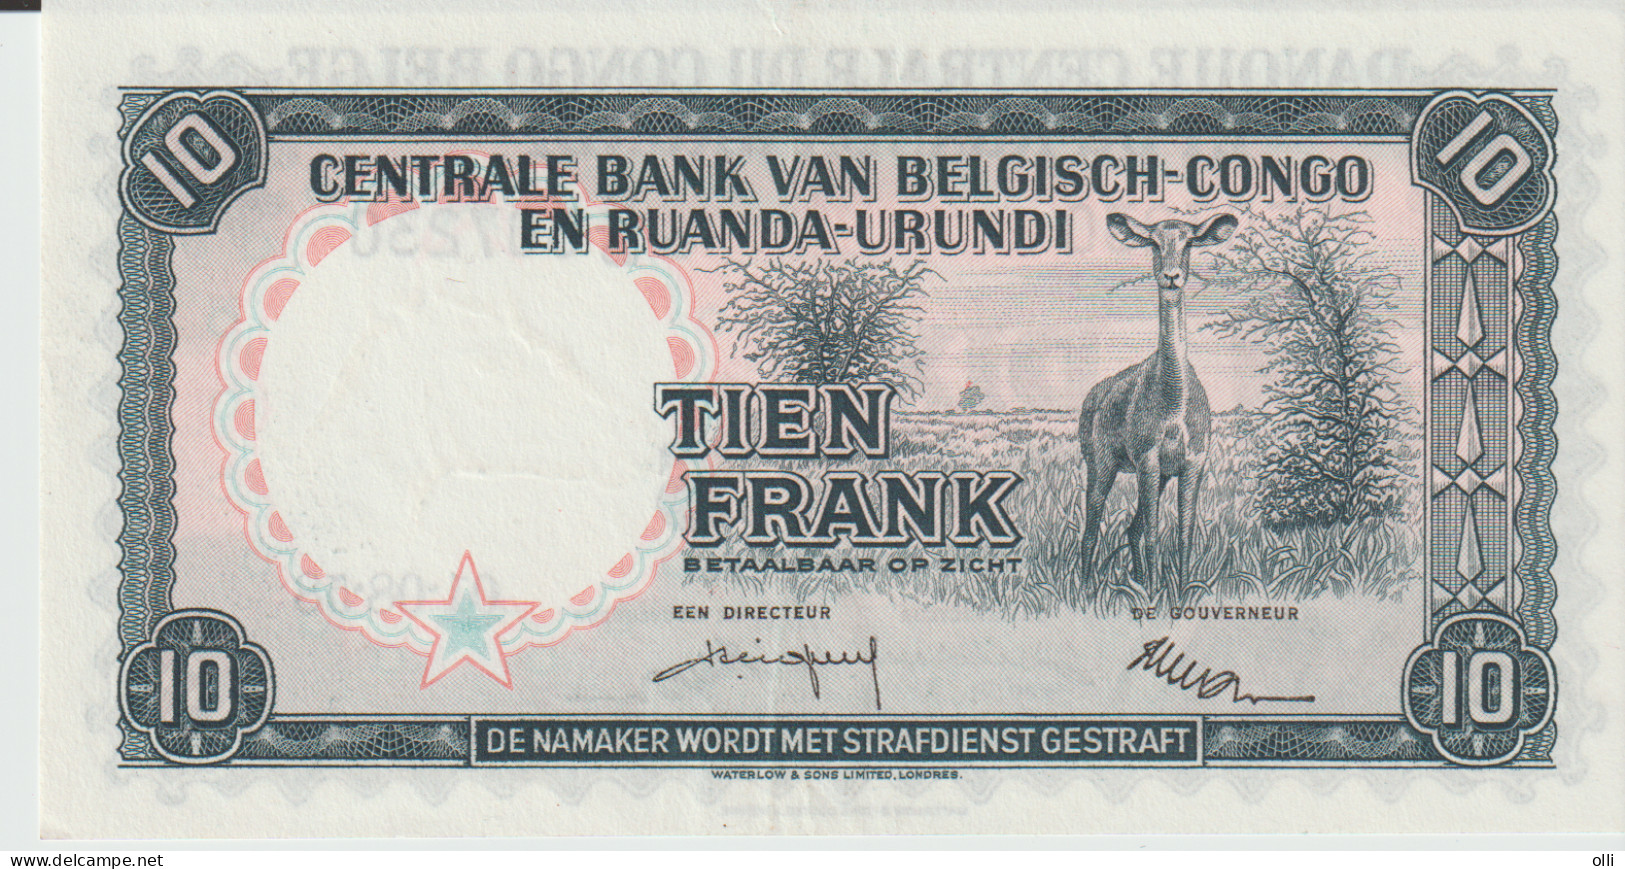 CONGO BELGA 10 FRANCS 1958 UNC - Belgian Congo Bank